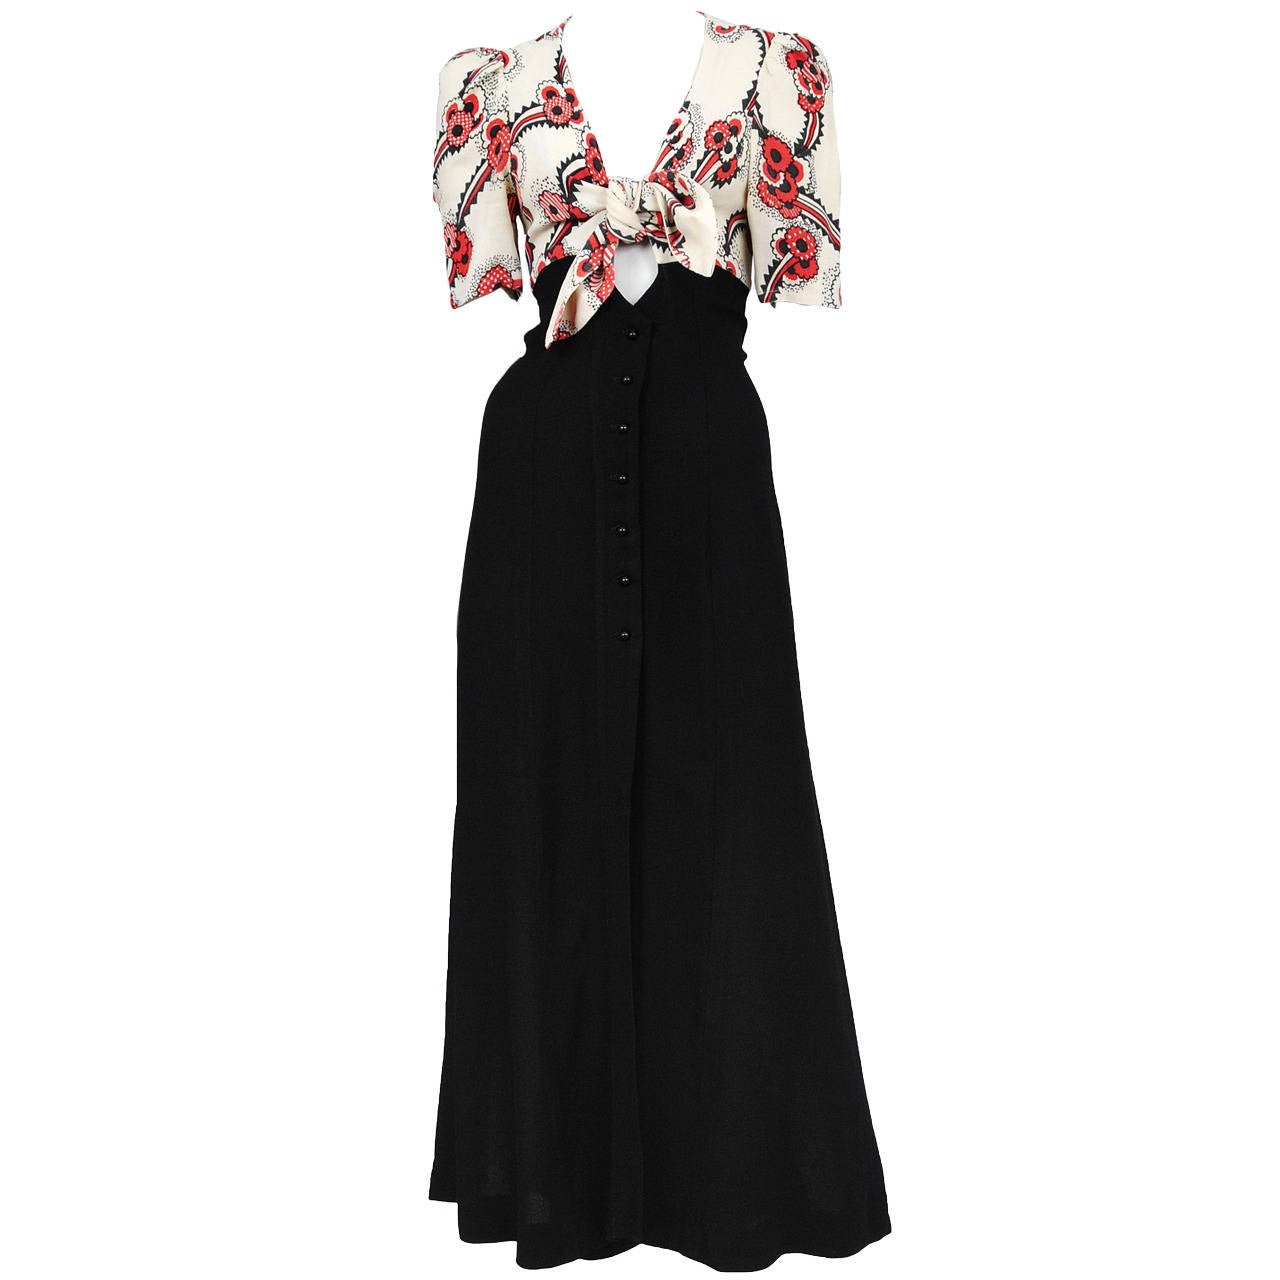 Ossie Clark Crepe Dress With Iconic Celia Birtwell Print